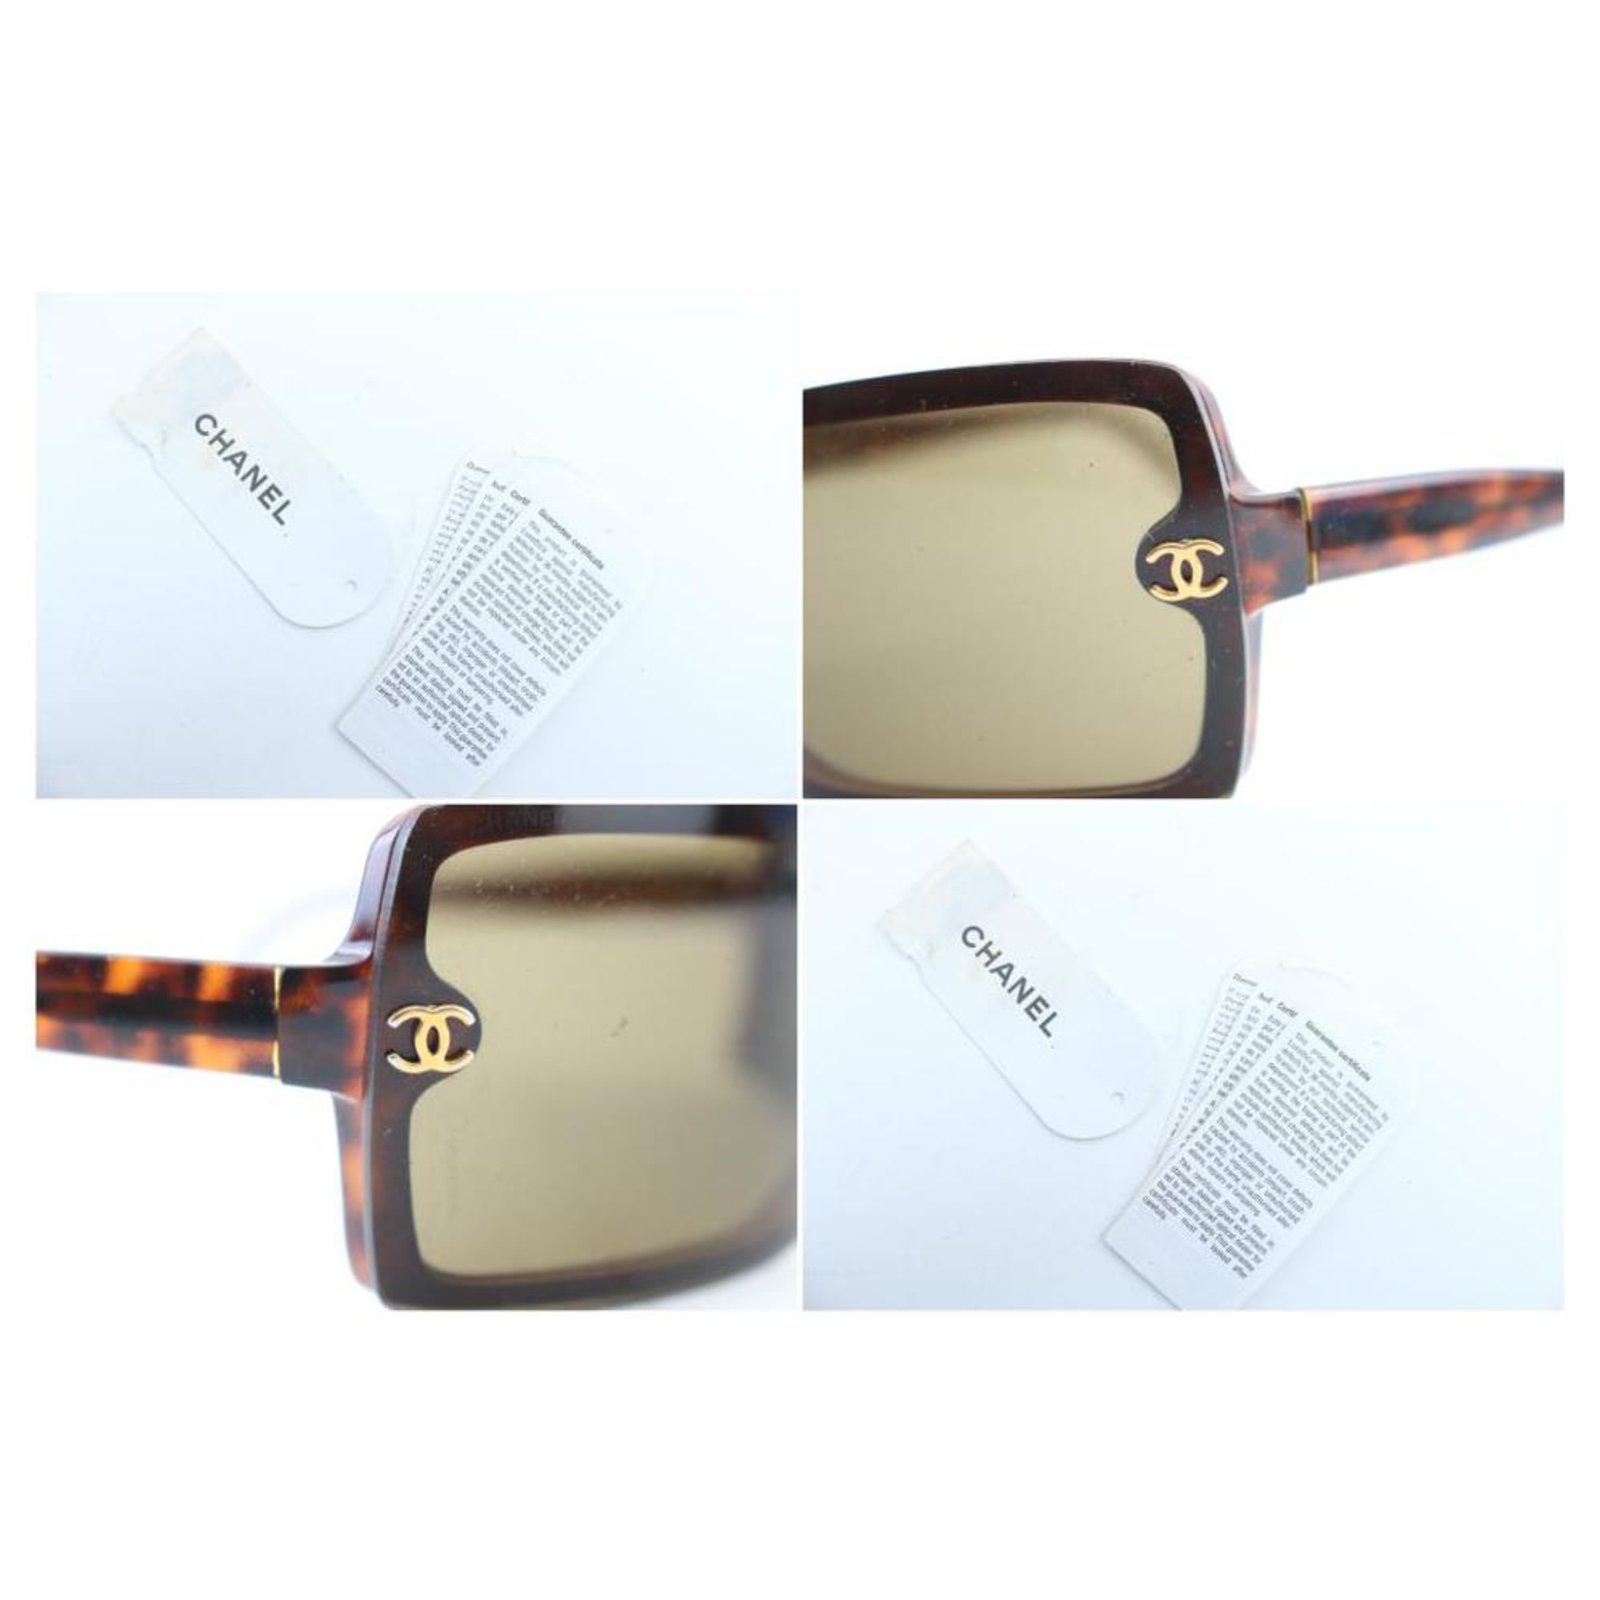 CHANEL Boxed Womens Designer Sunglasses Brown Shield 5067 C.710/13 149 –  SunglassBlog